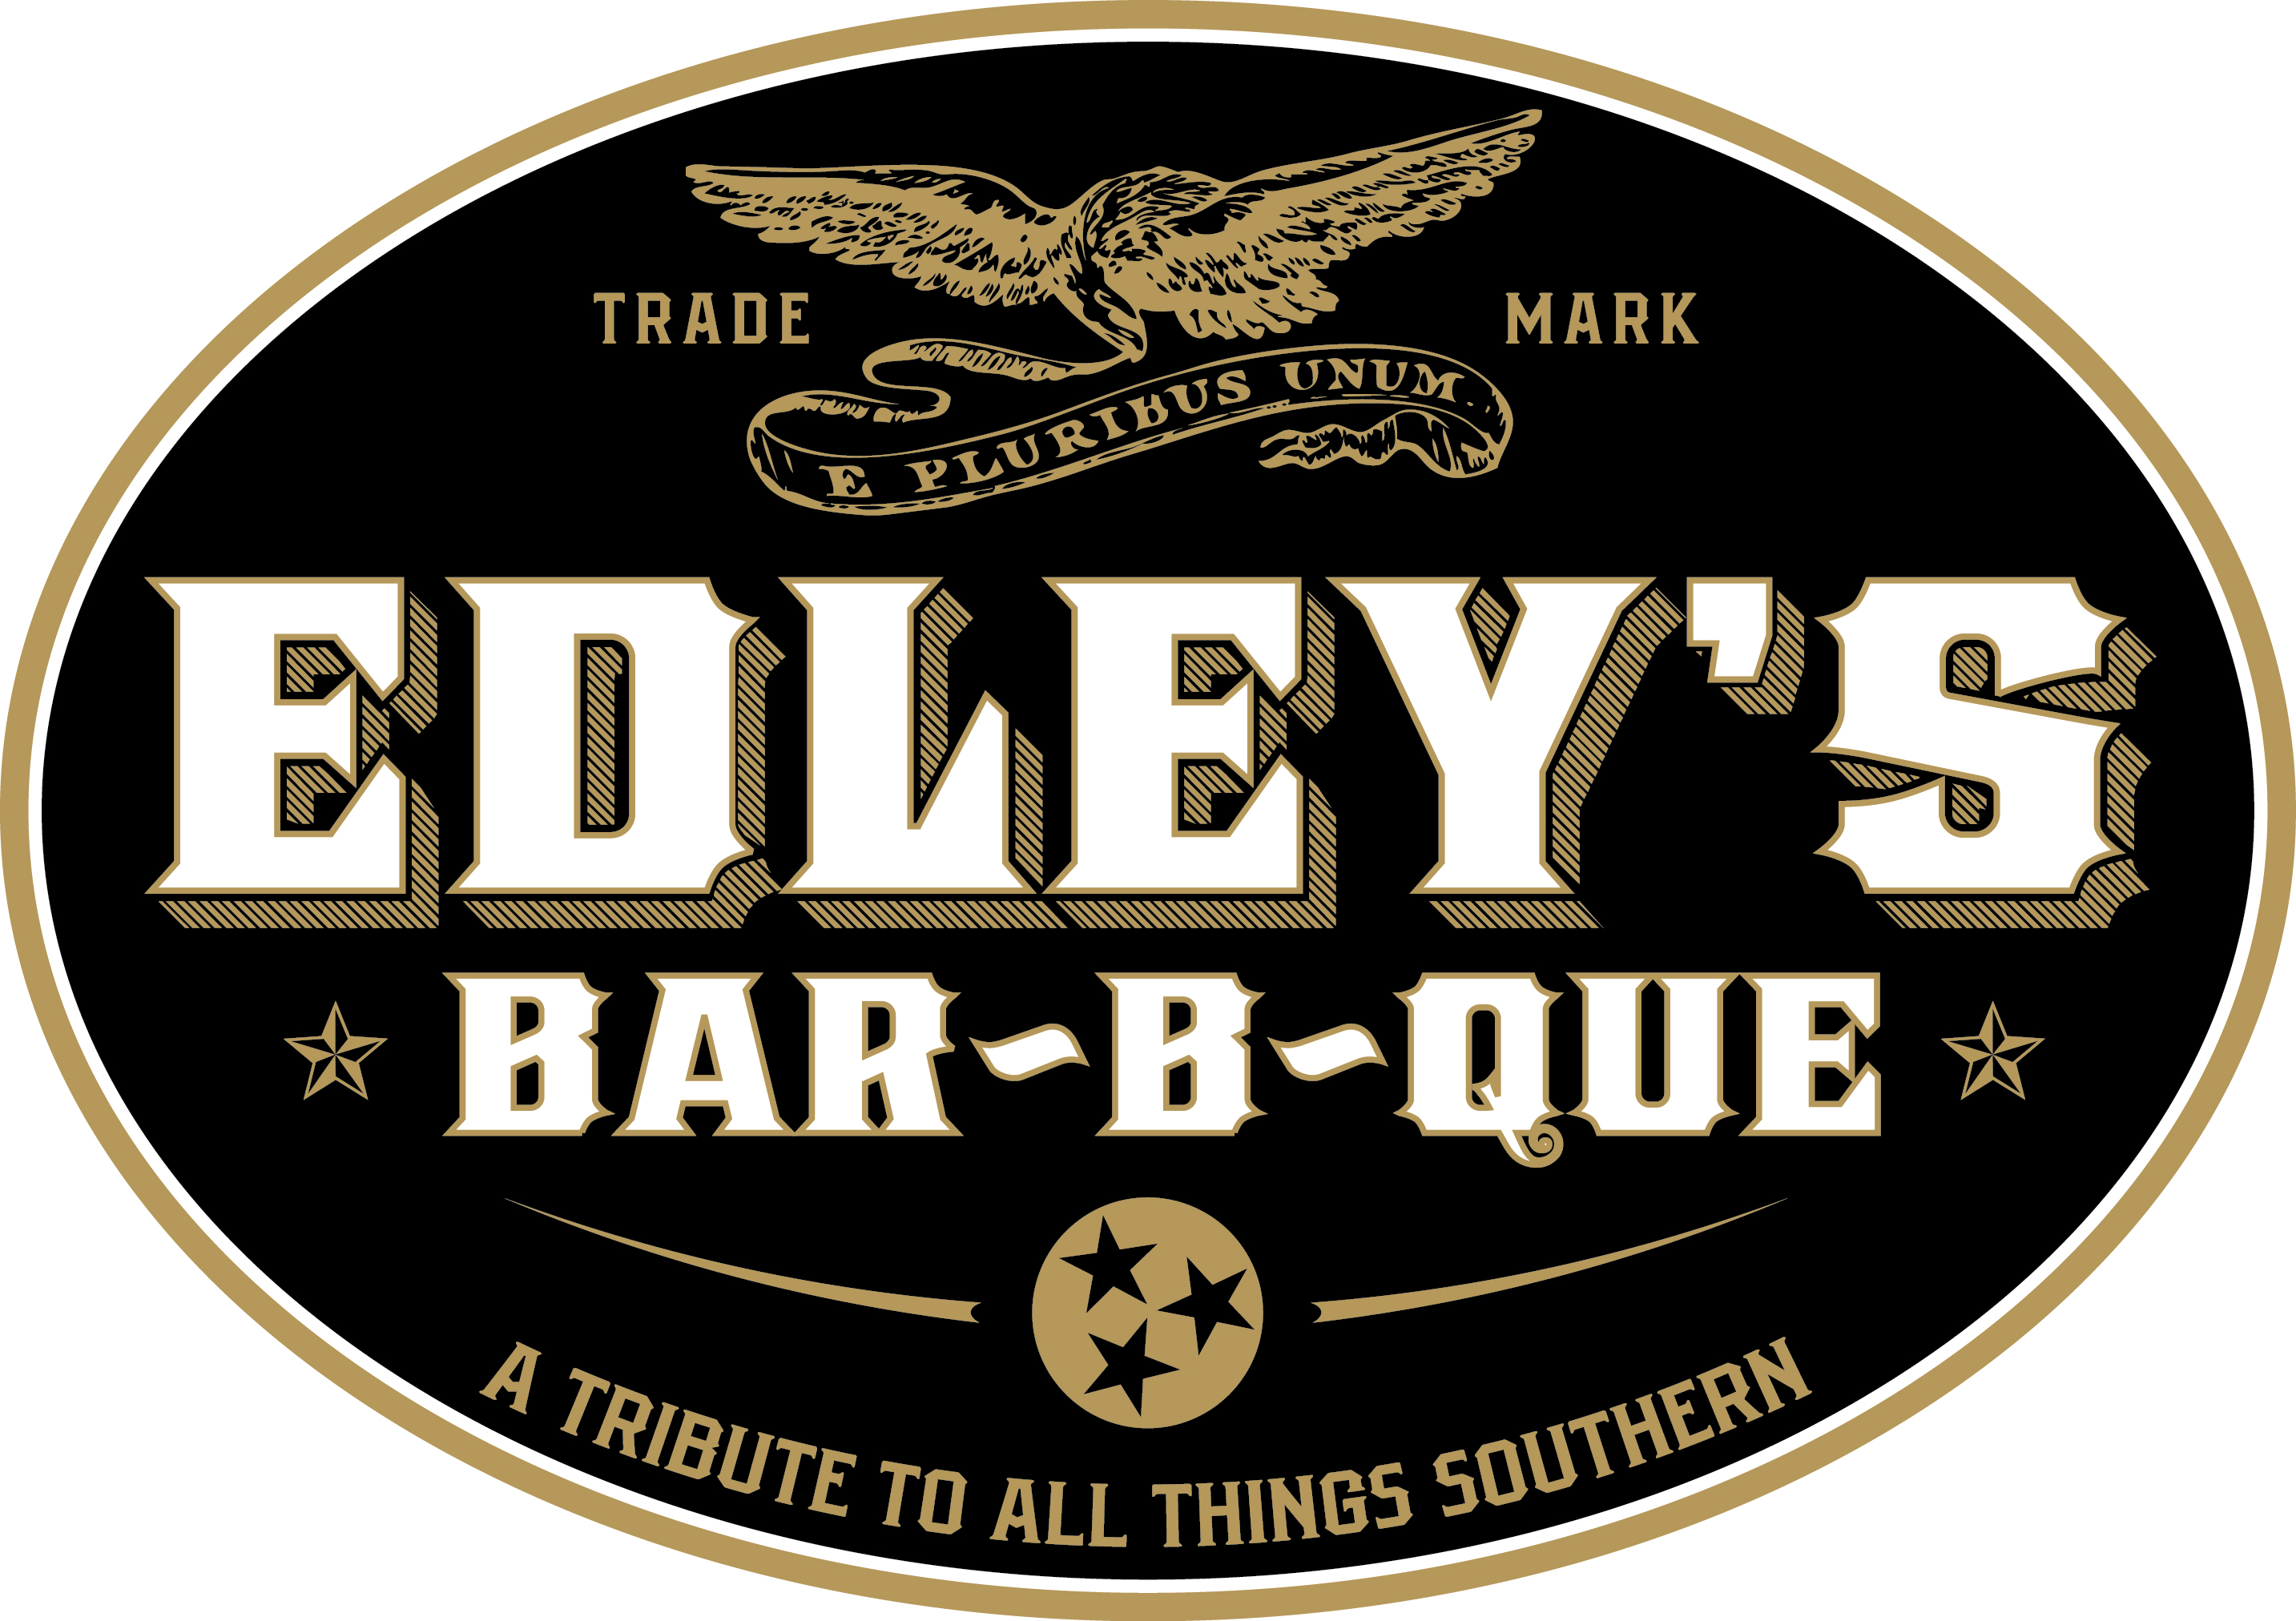 Edley's Bar-B-Que Franchise